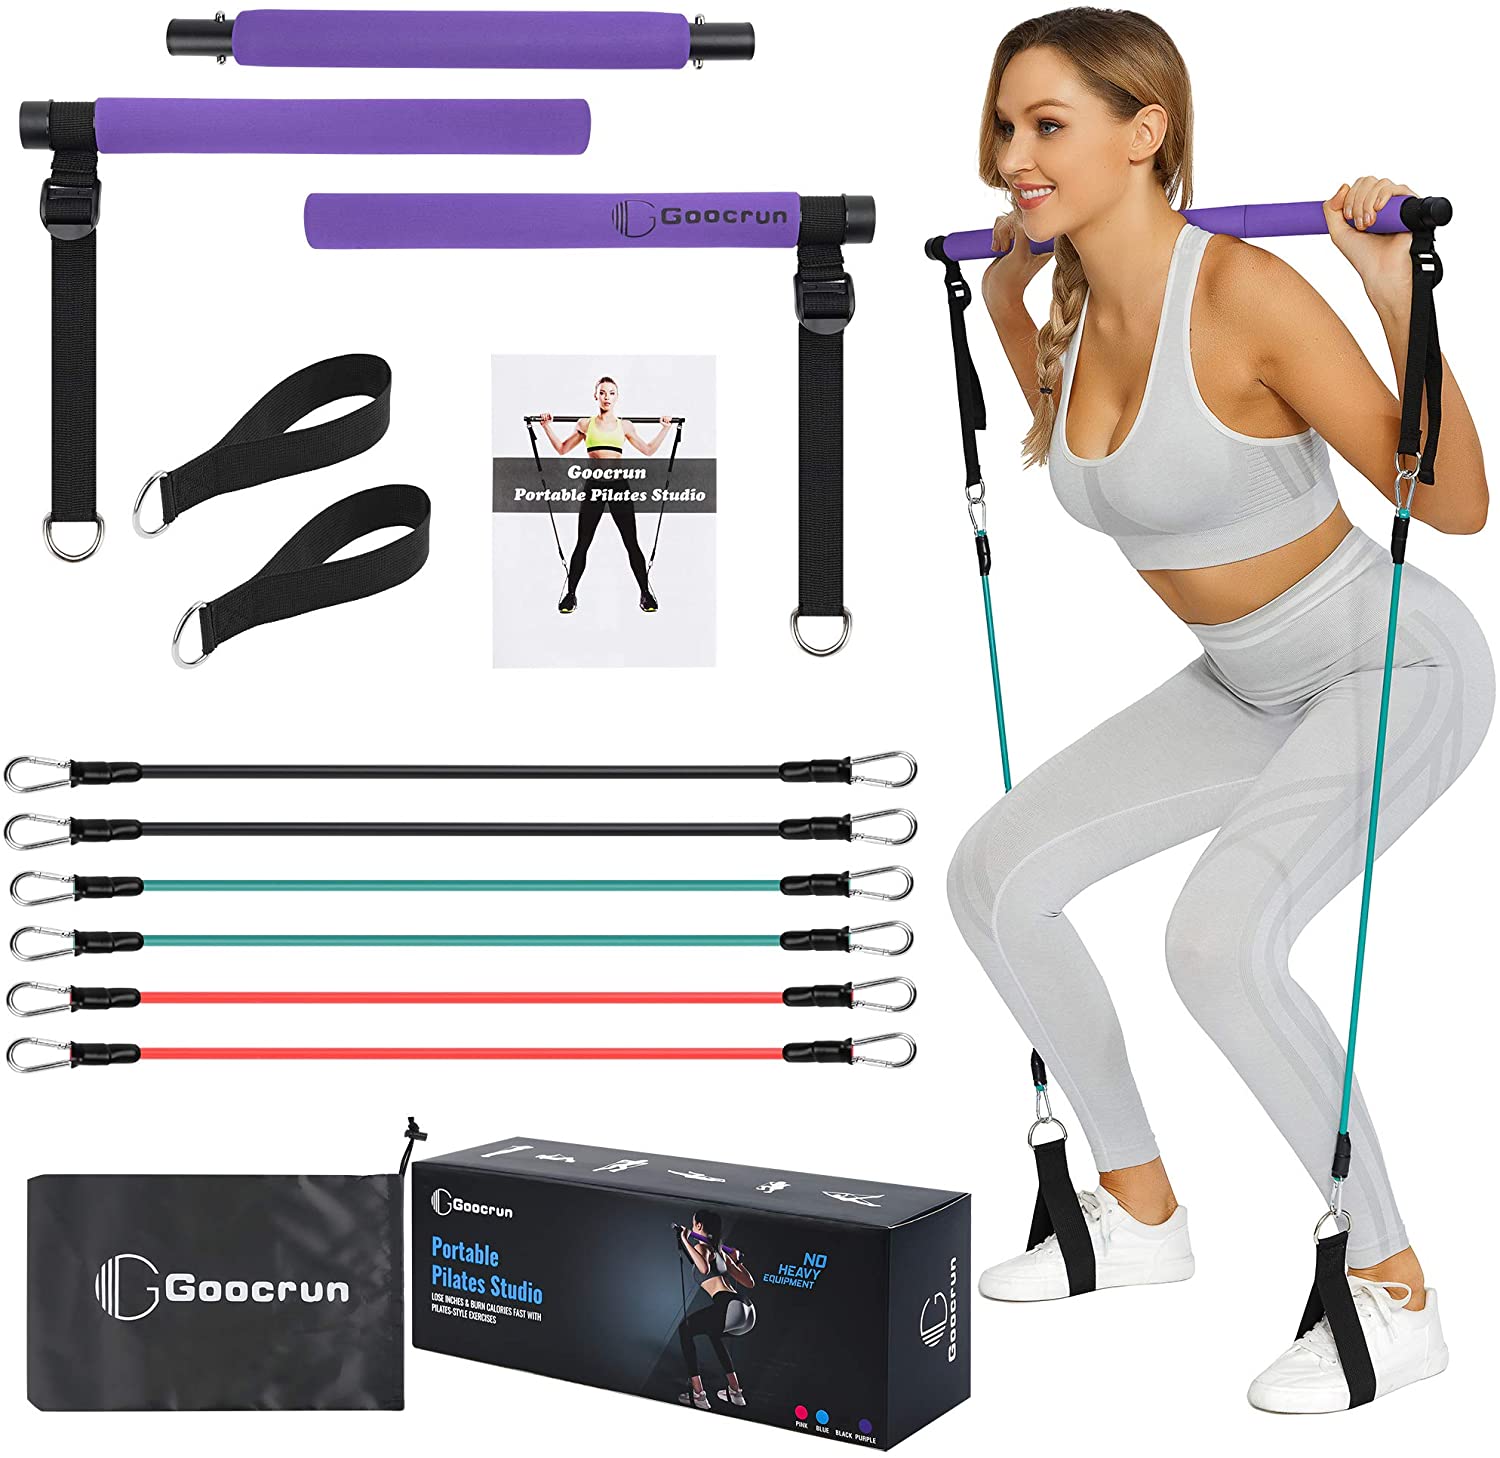 Wholesale Goocrun Portable Pilates Bar Kit with Resistance Bands